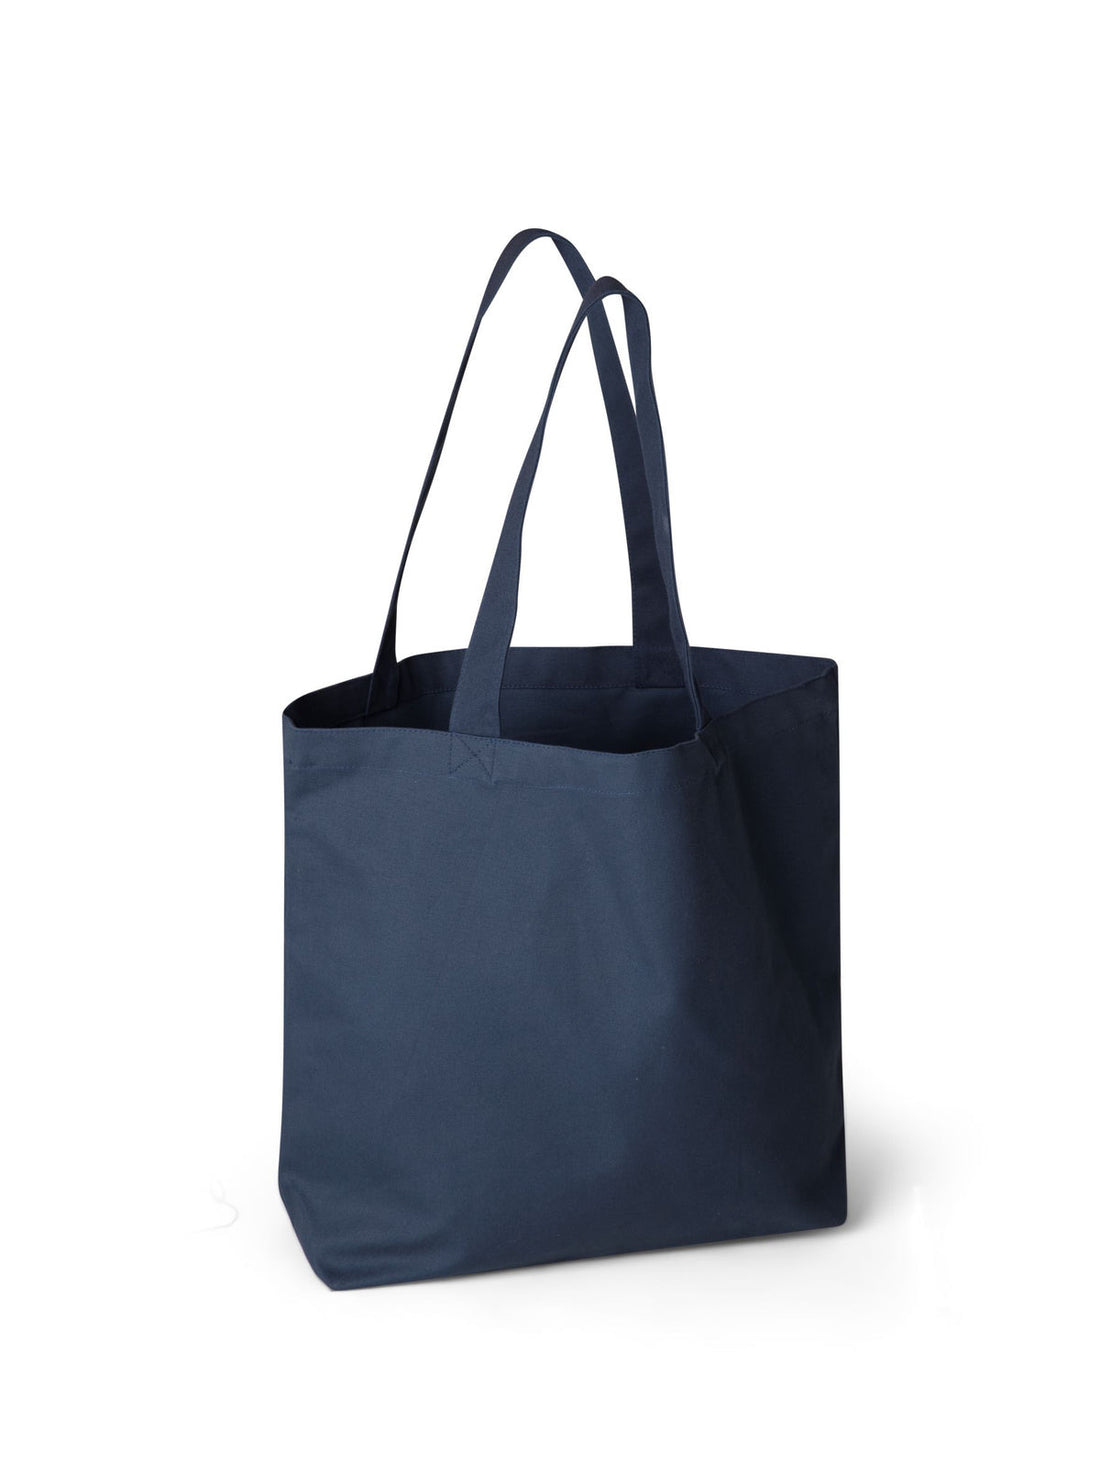 XL Heavy shopper bag - recycled